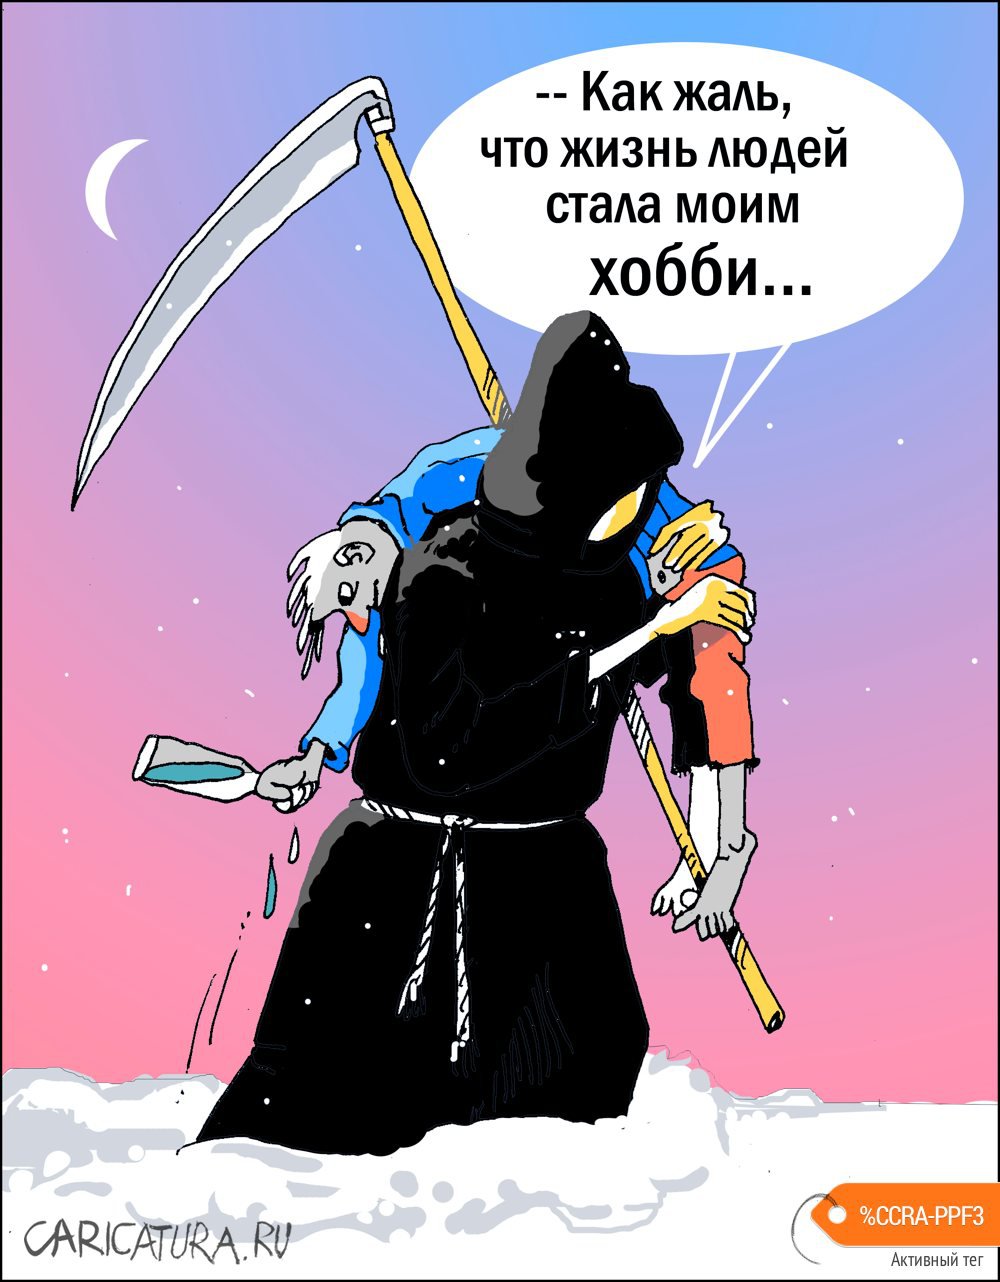 Карикатура "Хобби", Александр Уваров